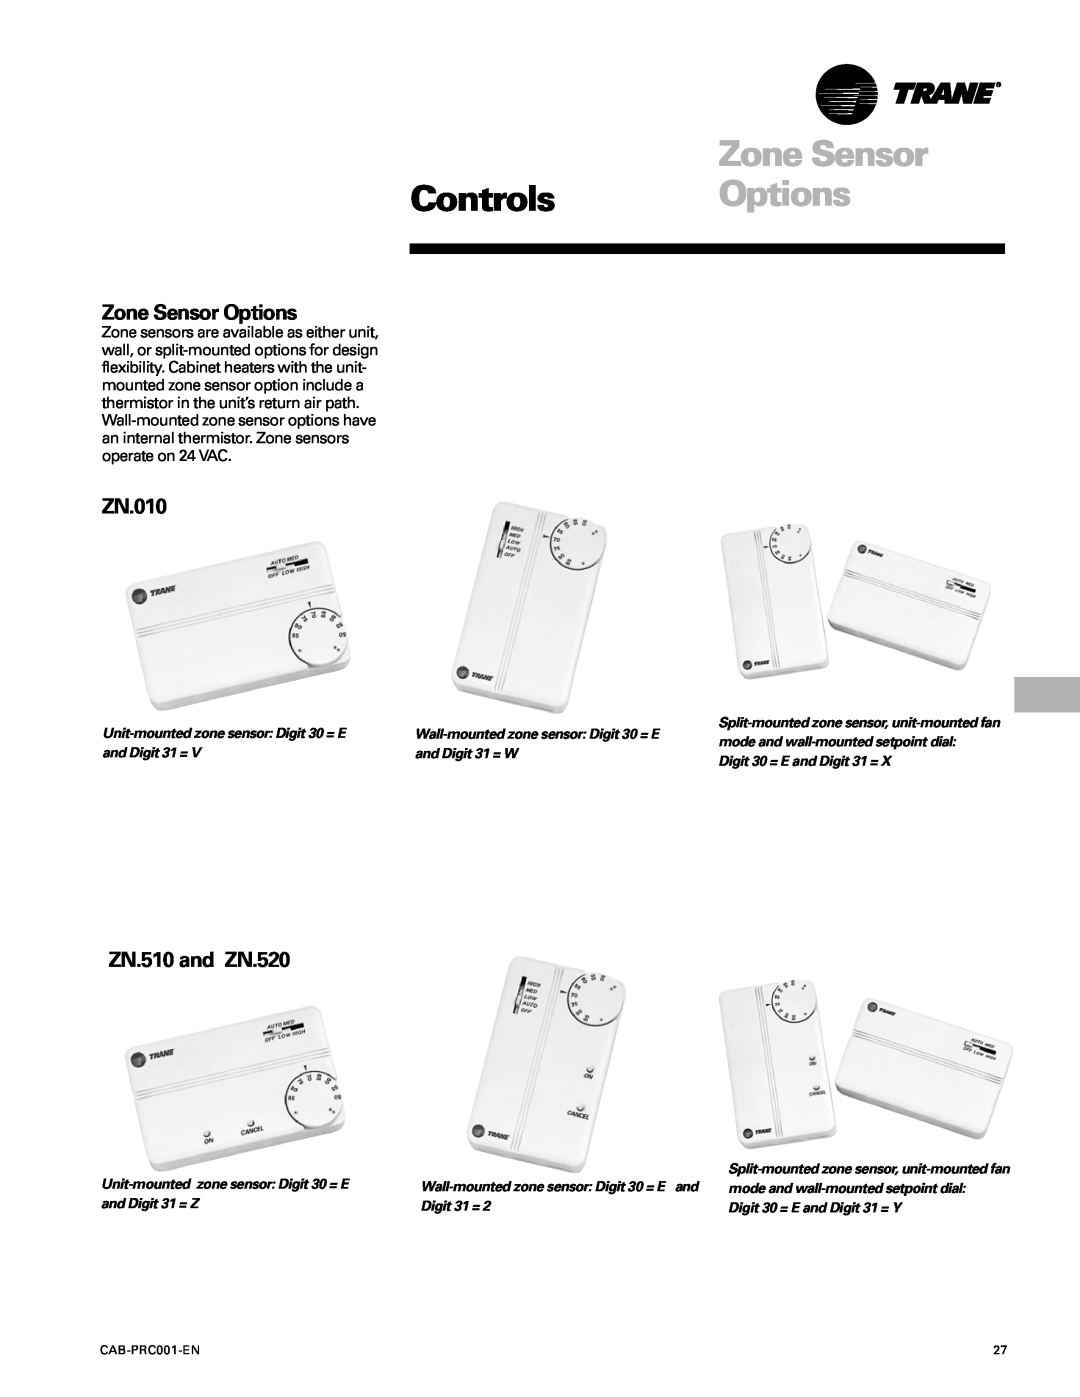 Trane CAB-PRC001-EN manual Controls Options, Zone Sensor Options, ZN.010, ZN.510 and ZN.520 